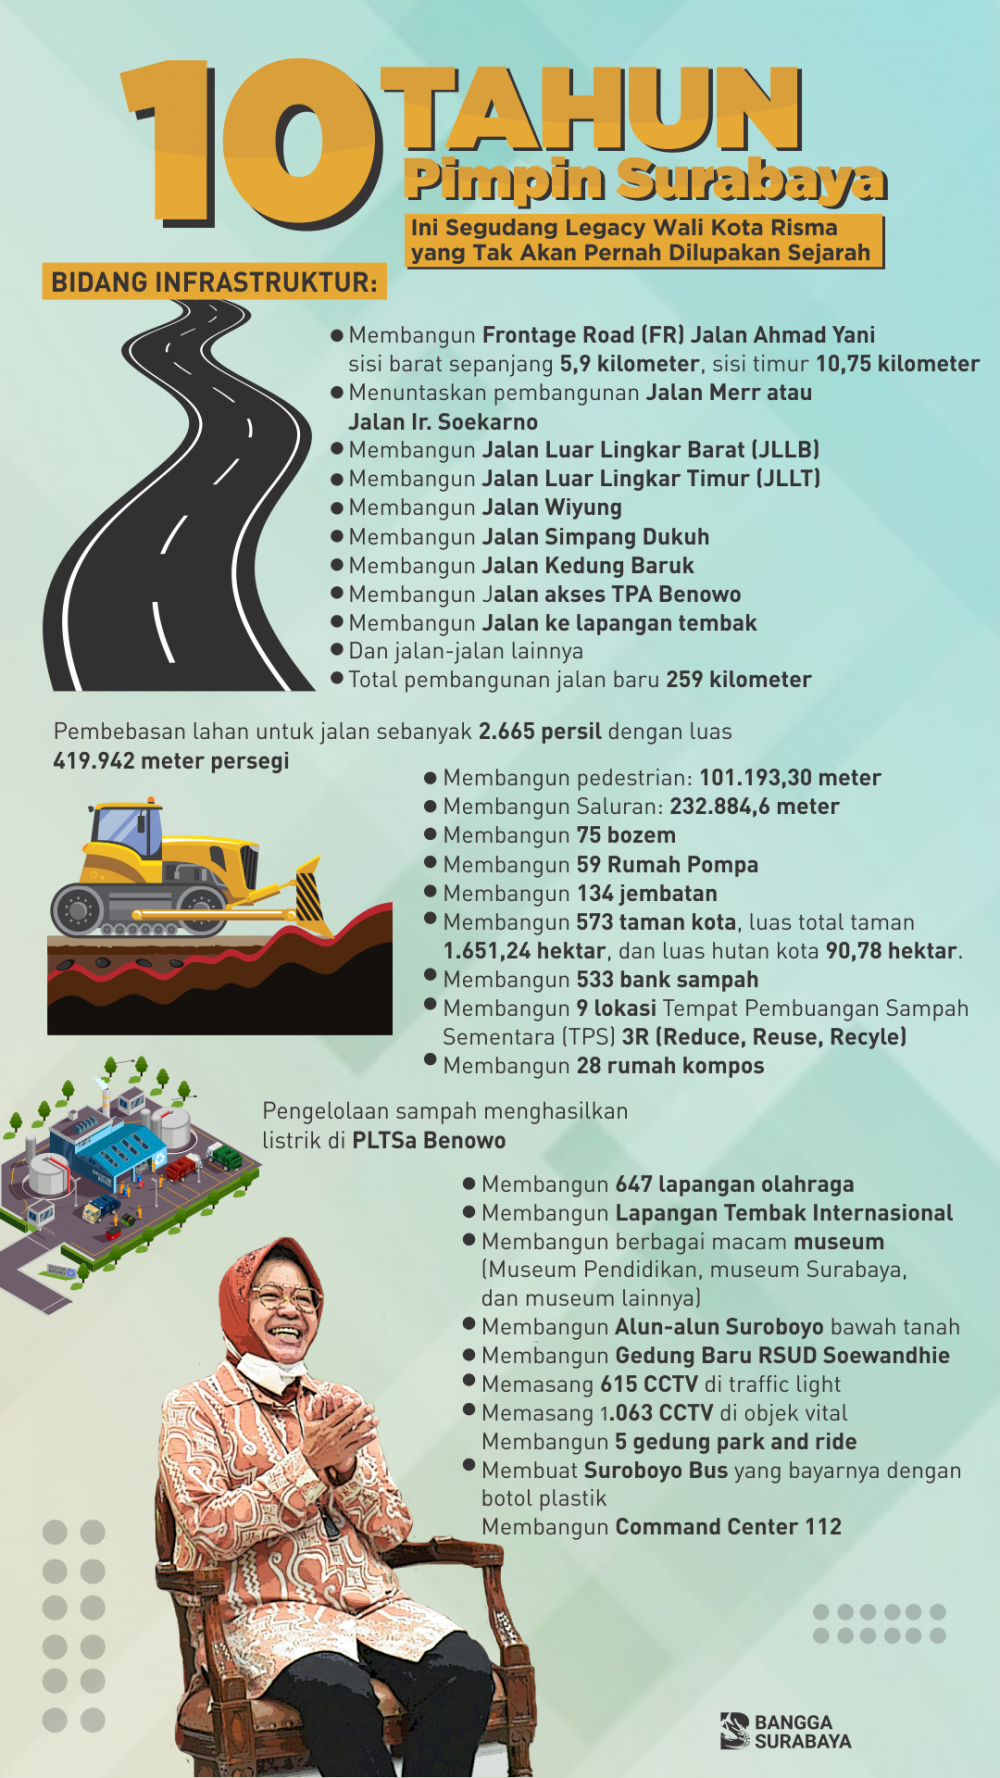 10 Tahun Pimpin Surabaya, Warisan Wali Kota Risma Cetak Sejarah